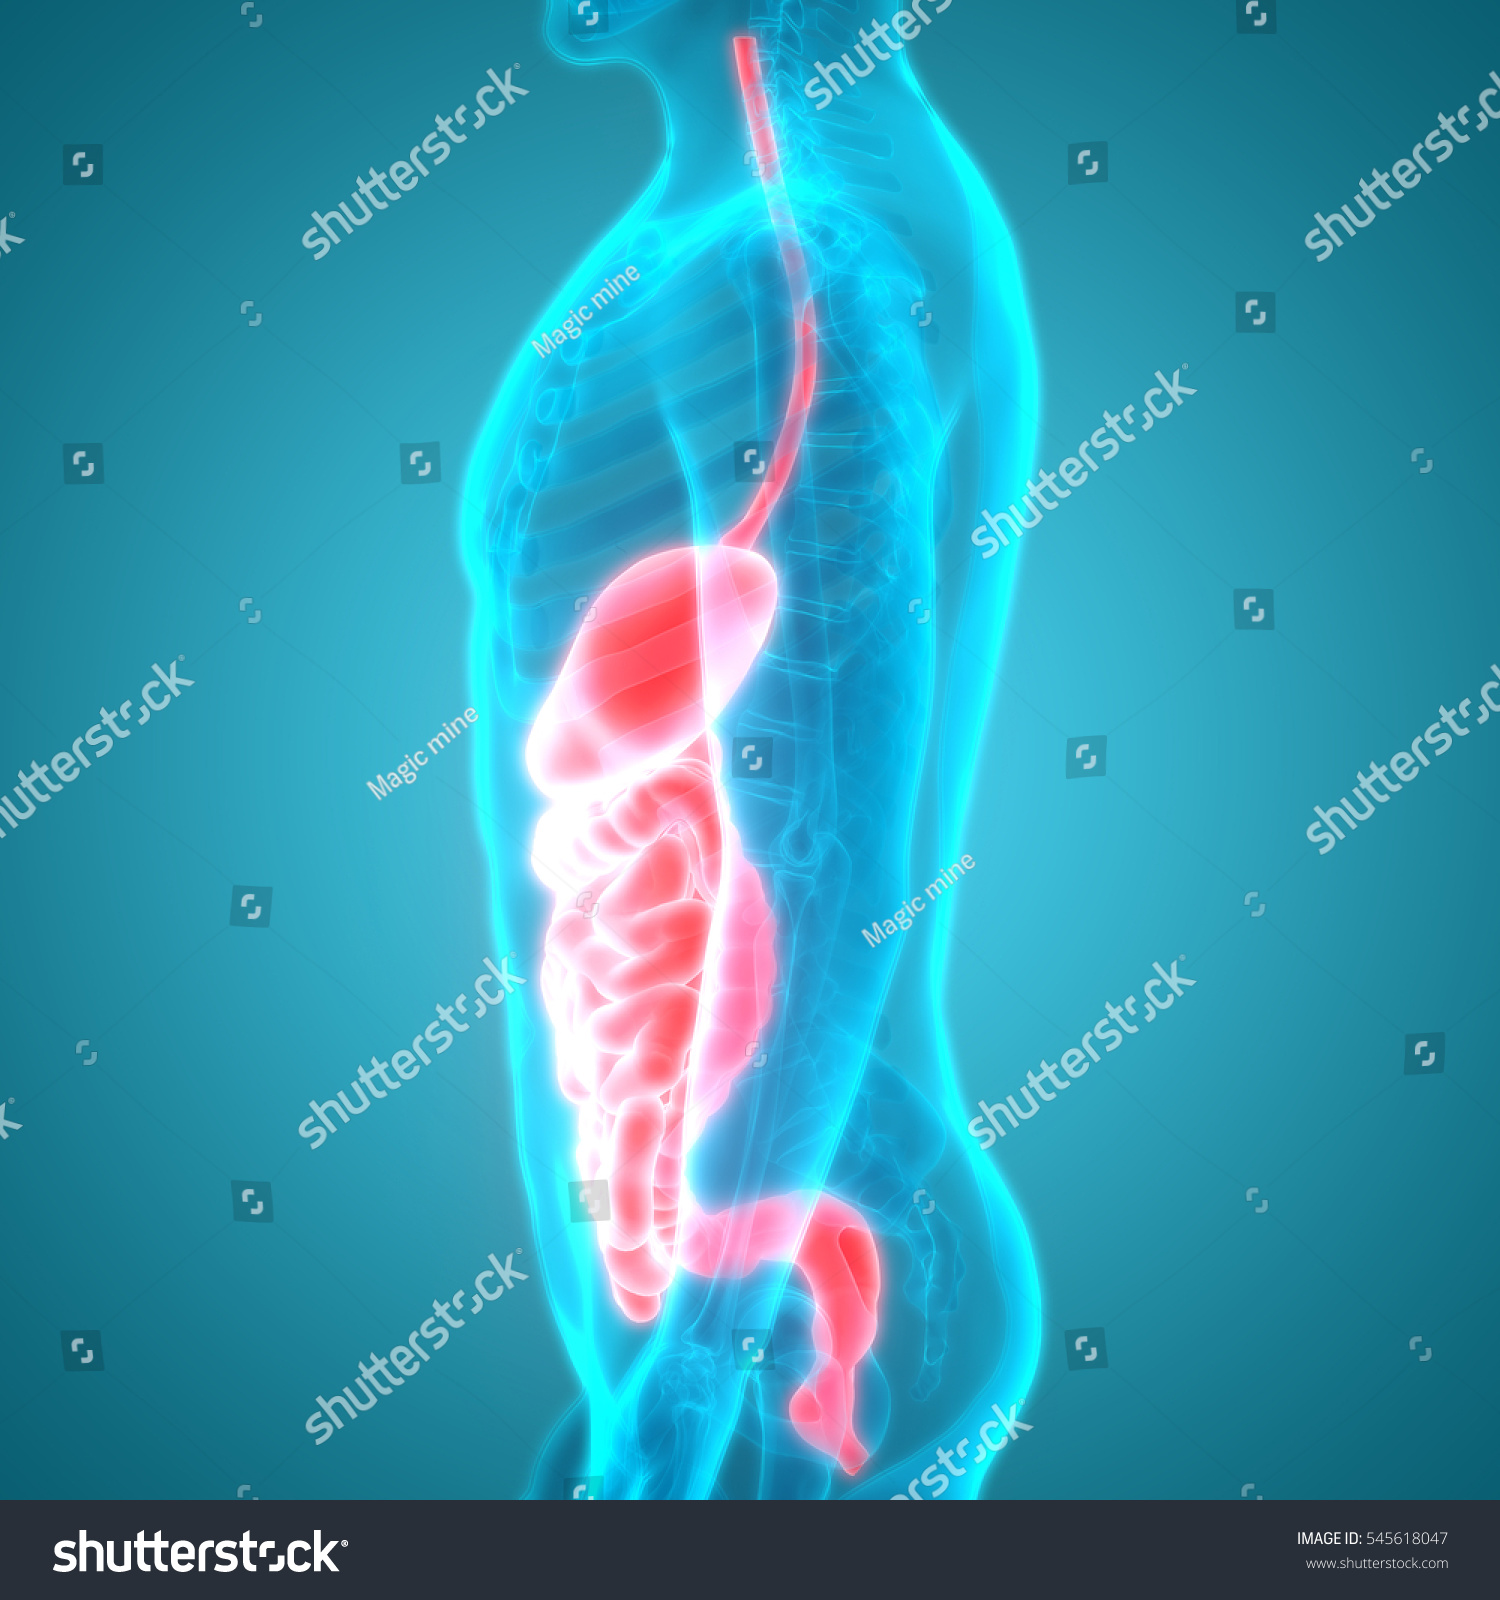 human-digestive-system-anatomy-3d-stock-photo-545618047-shutterstock